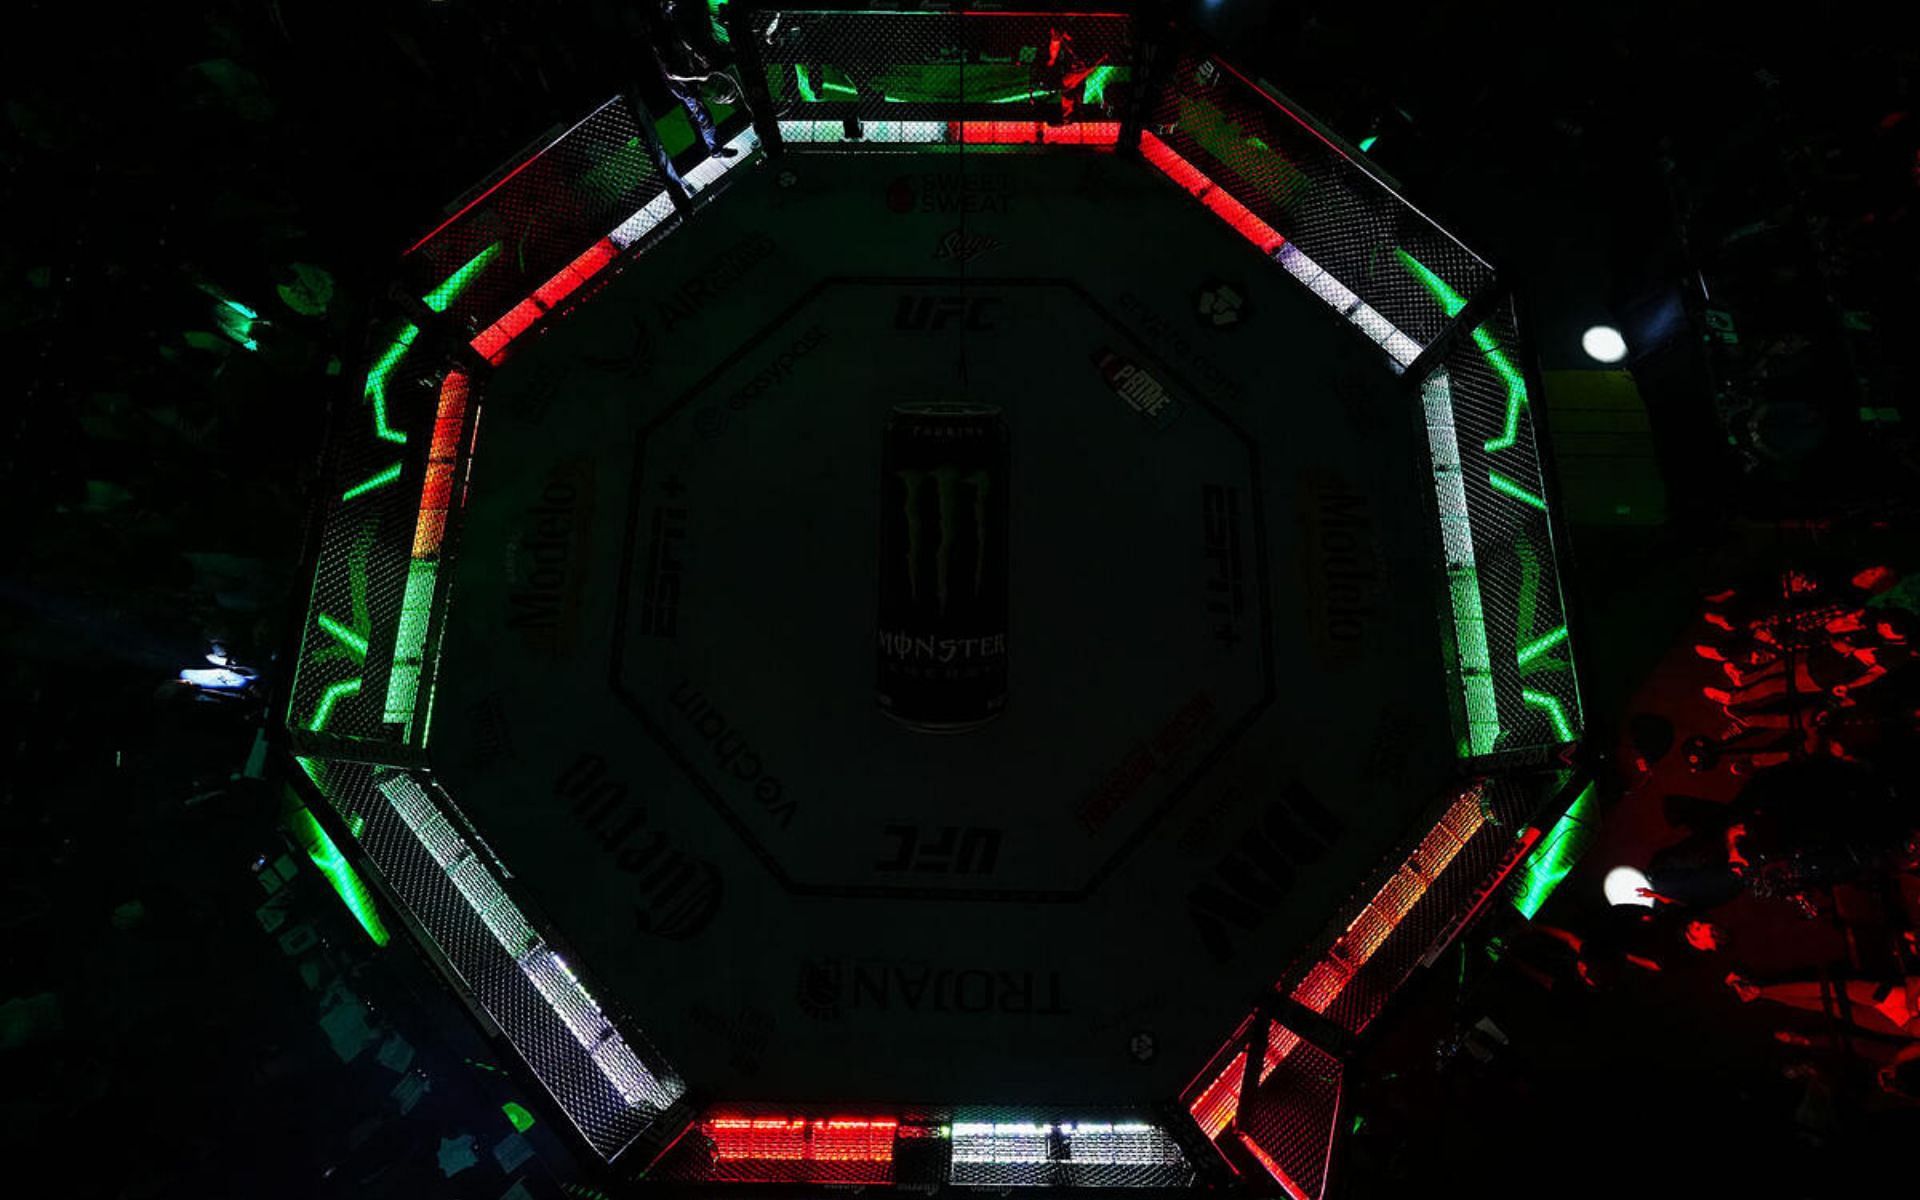 UFC octagon - Who